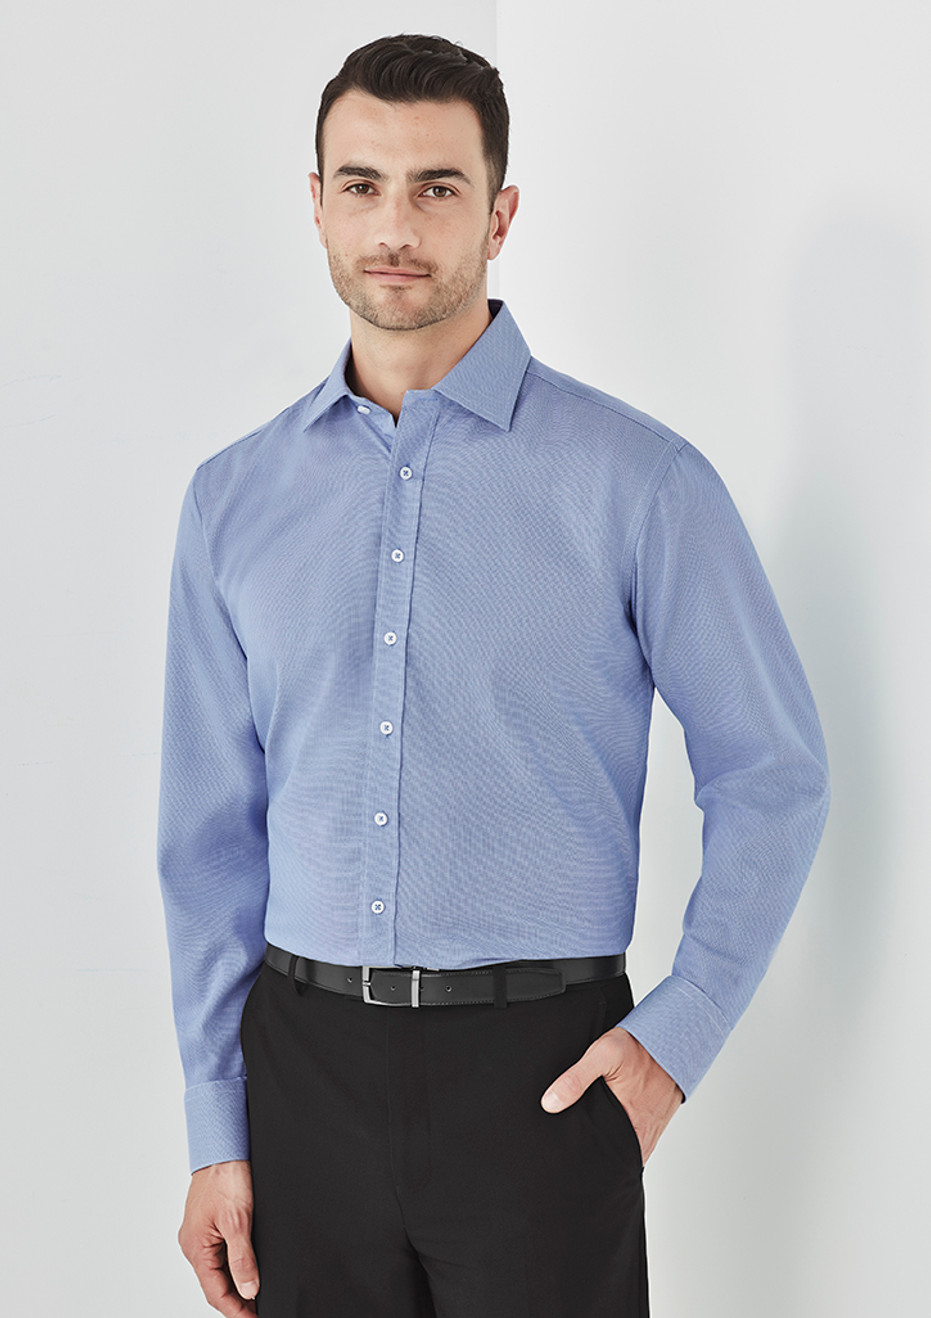 Biz Corporates 40320 MEN'S Hudson Long Sleeve Shirt | Available Colours: Dynasty Green, Melon, White, Patriot Blue